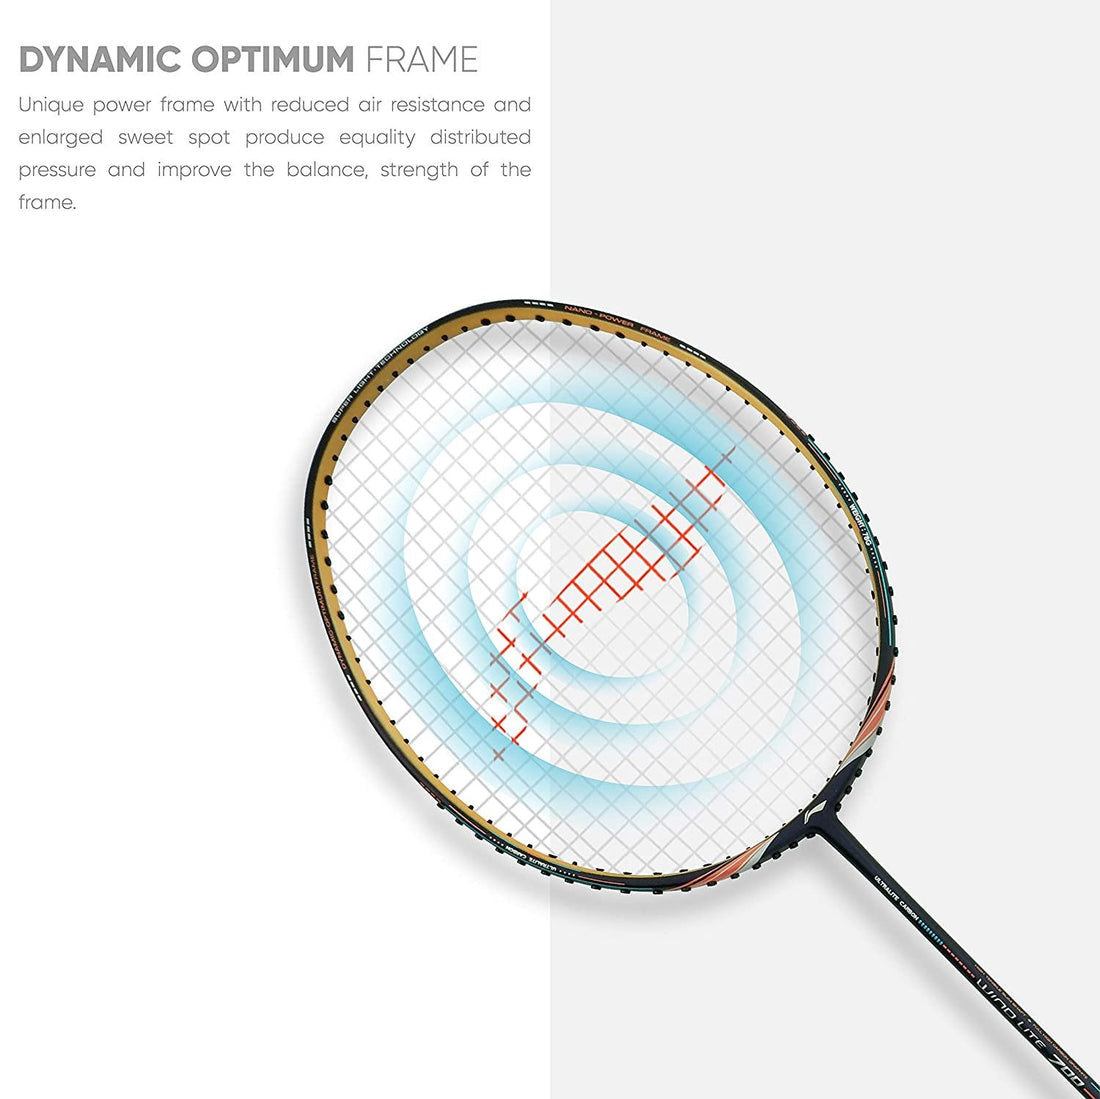 Li-Ning Wind Lite 700 Carbon Fibre Strung Badminton Racket - Best Price online Prokicksports.com